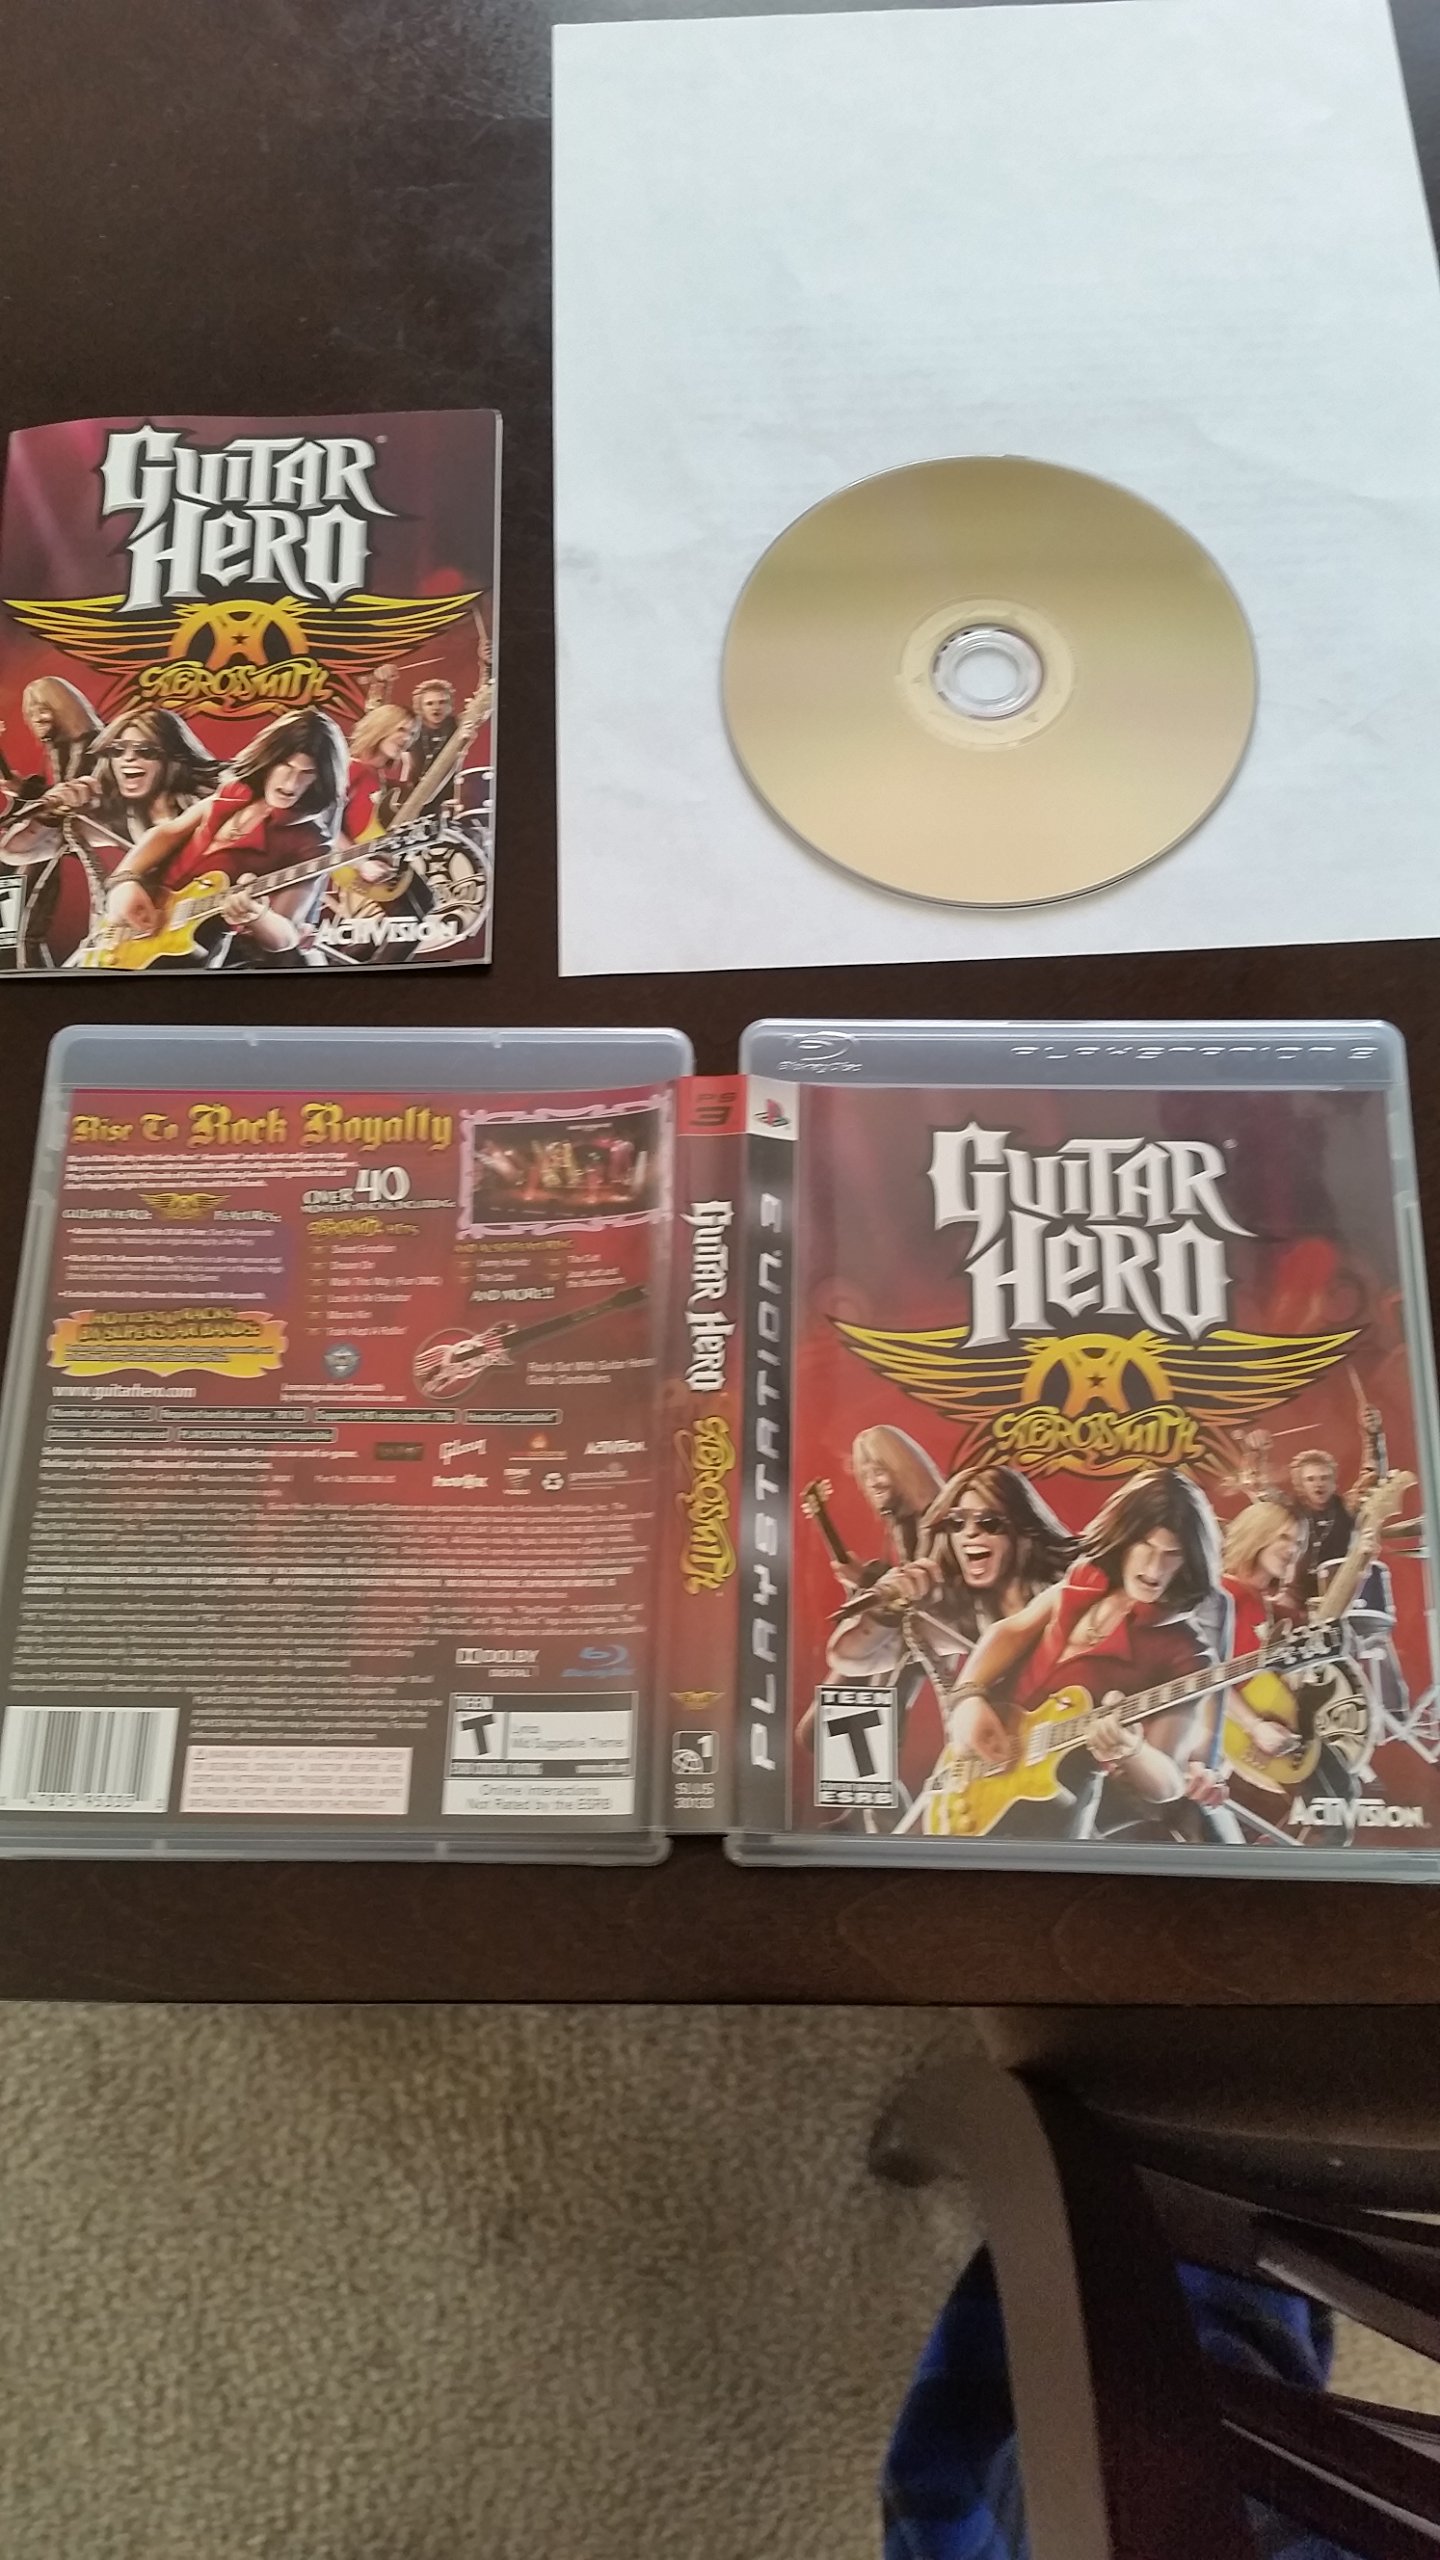 Guitar Hero Aerosmith - Playstation 3 (Game only)